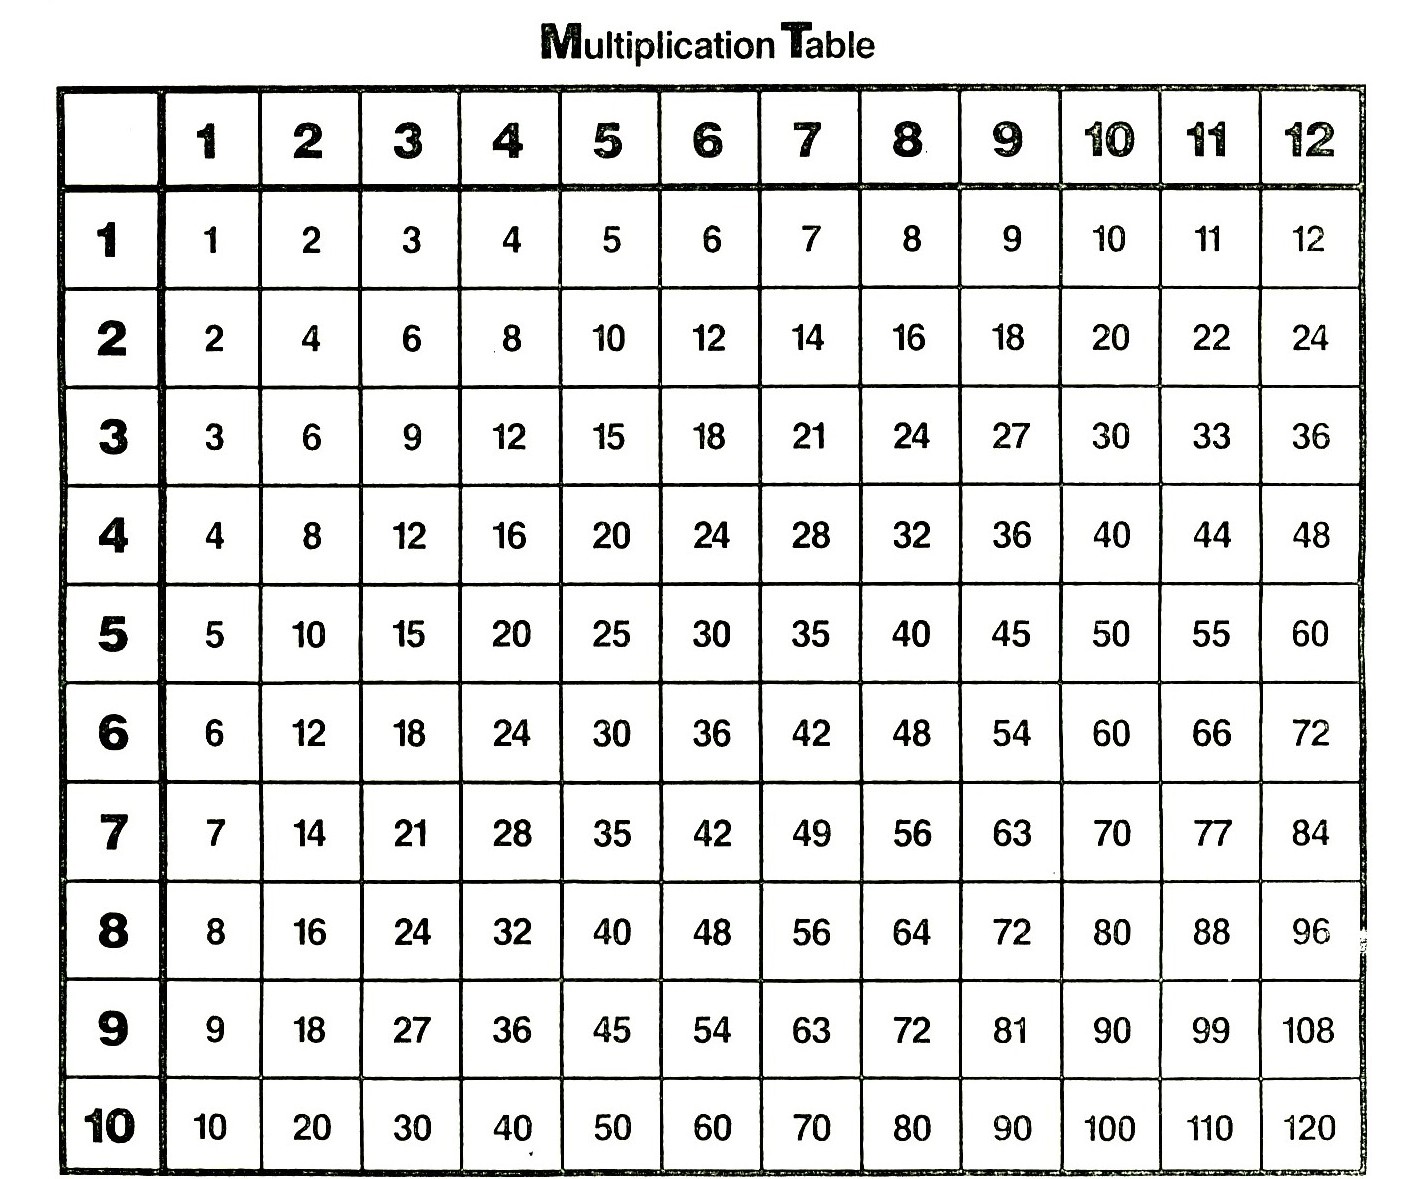 Multiplication table pdf printable